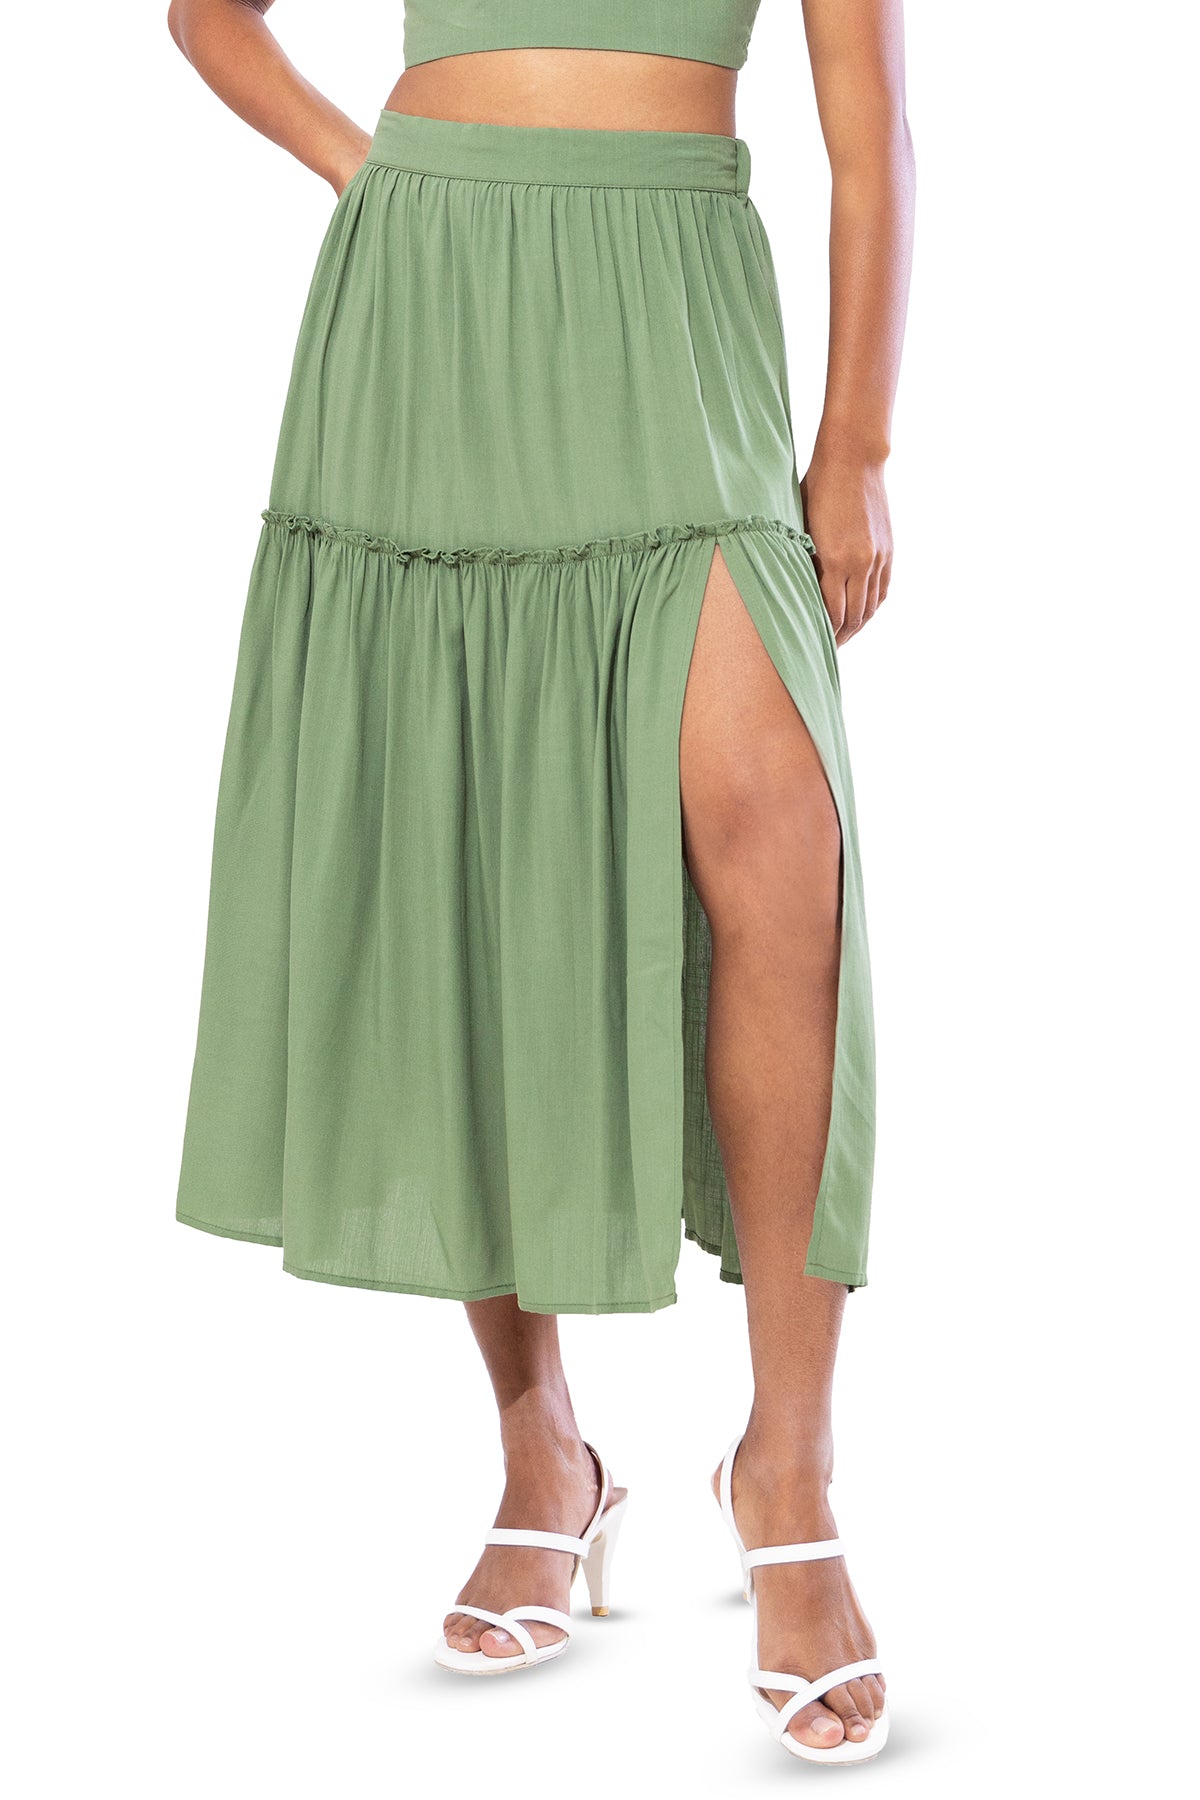 Modano Women's Casual Skirt